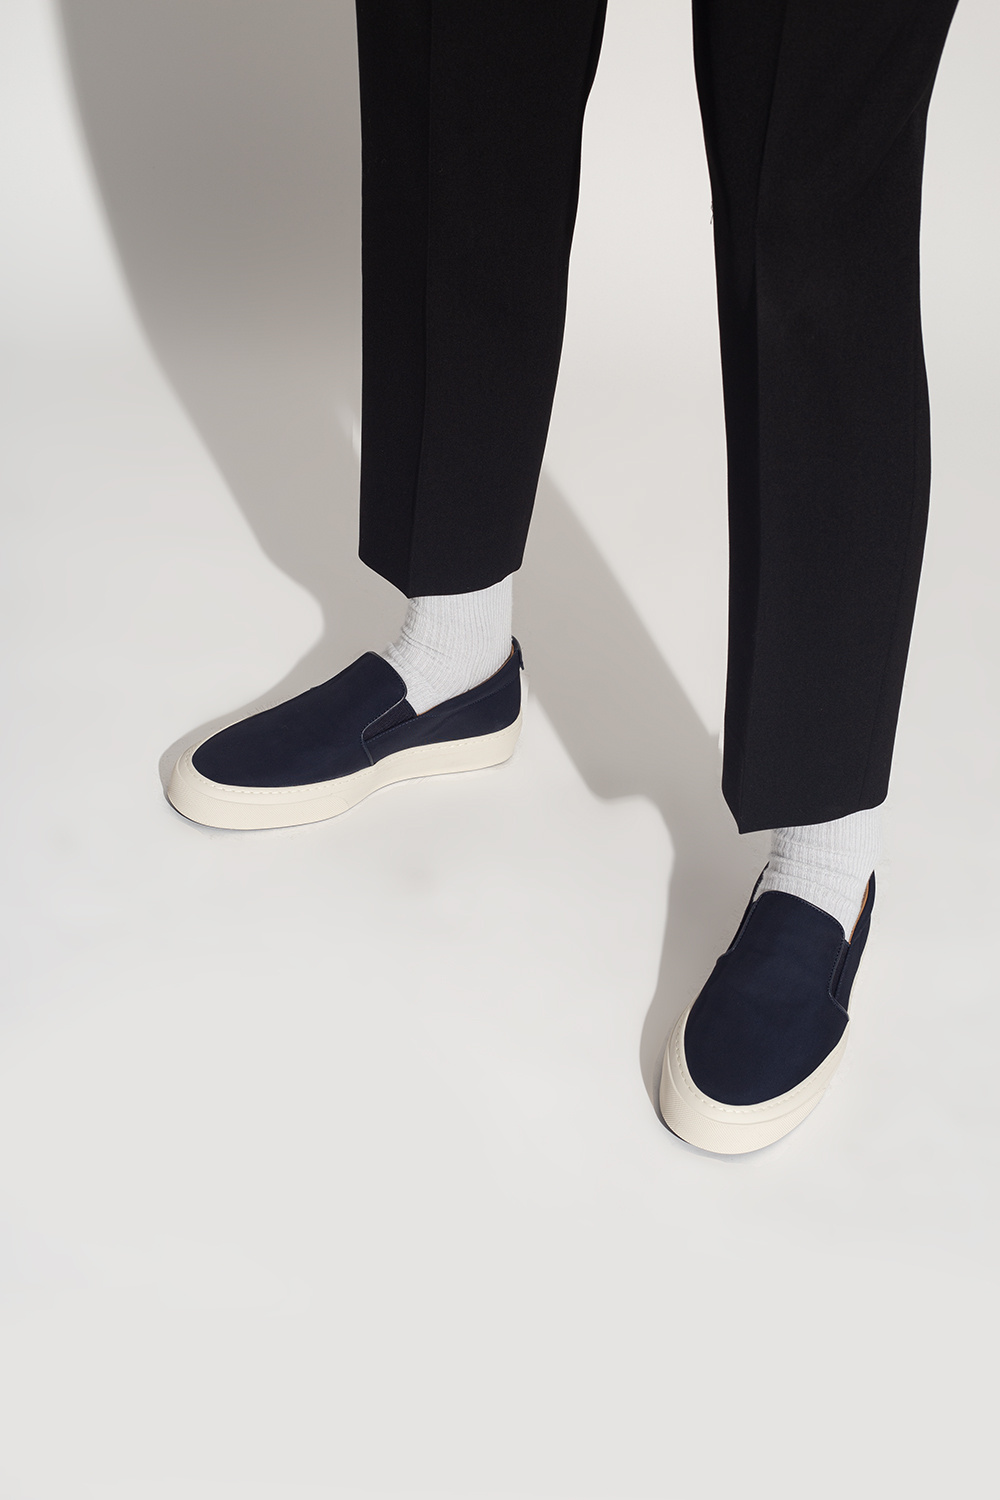 Giorgio Armani Slip-on sneakers | Men's Shoes | Vitkac